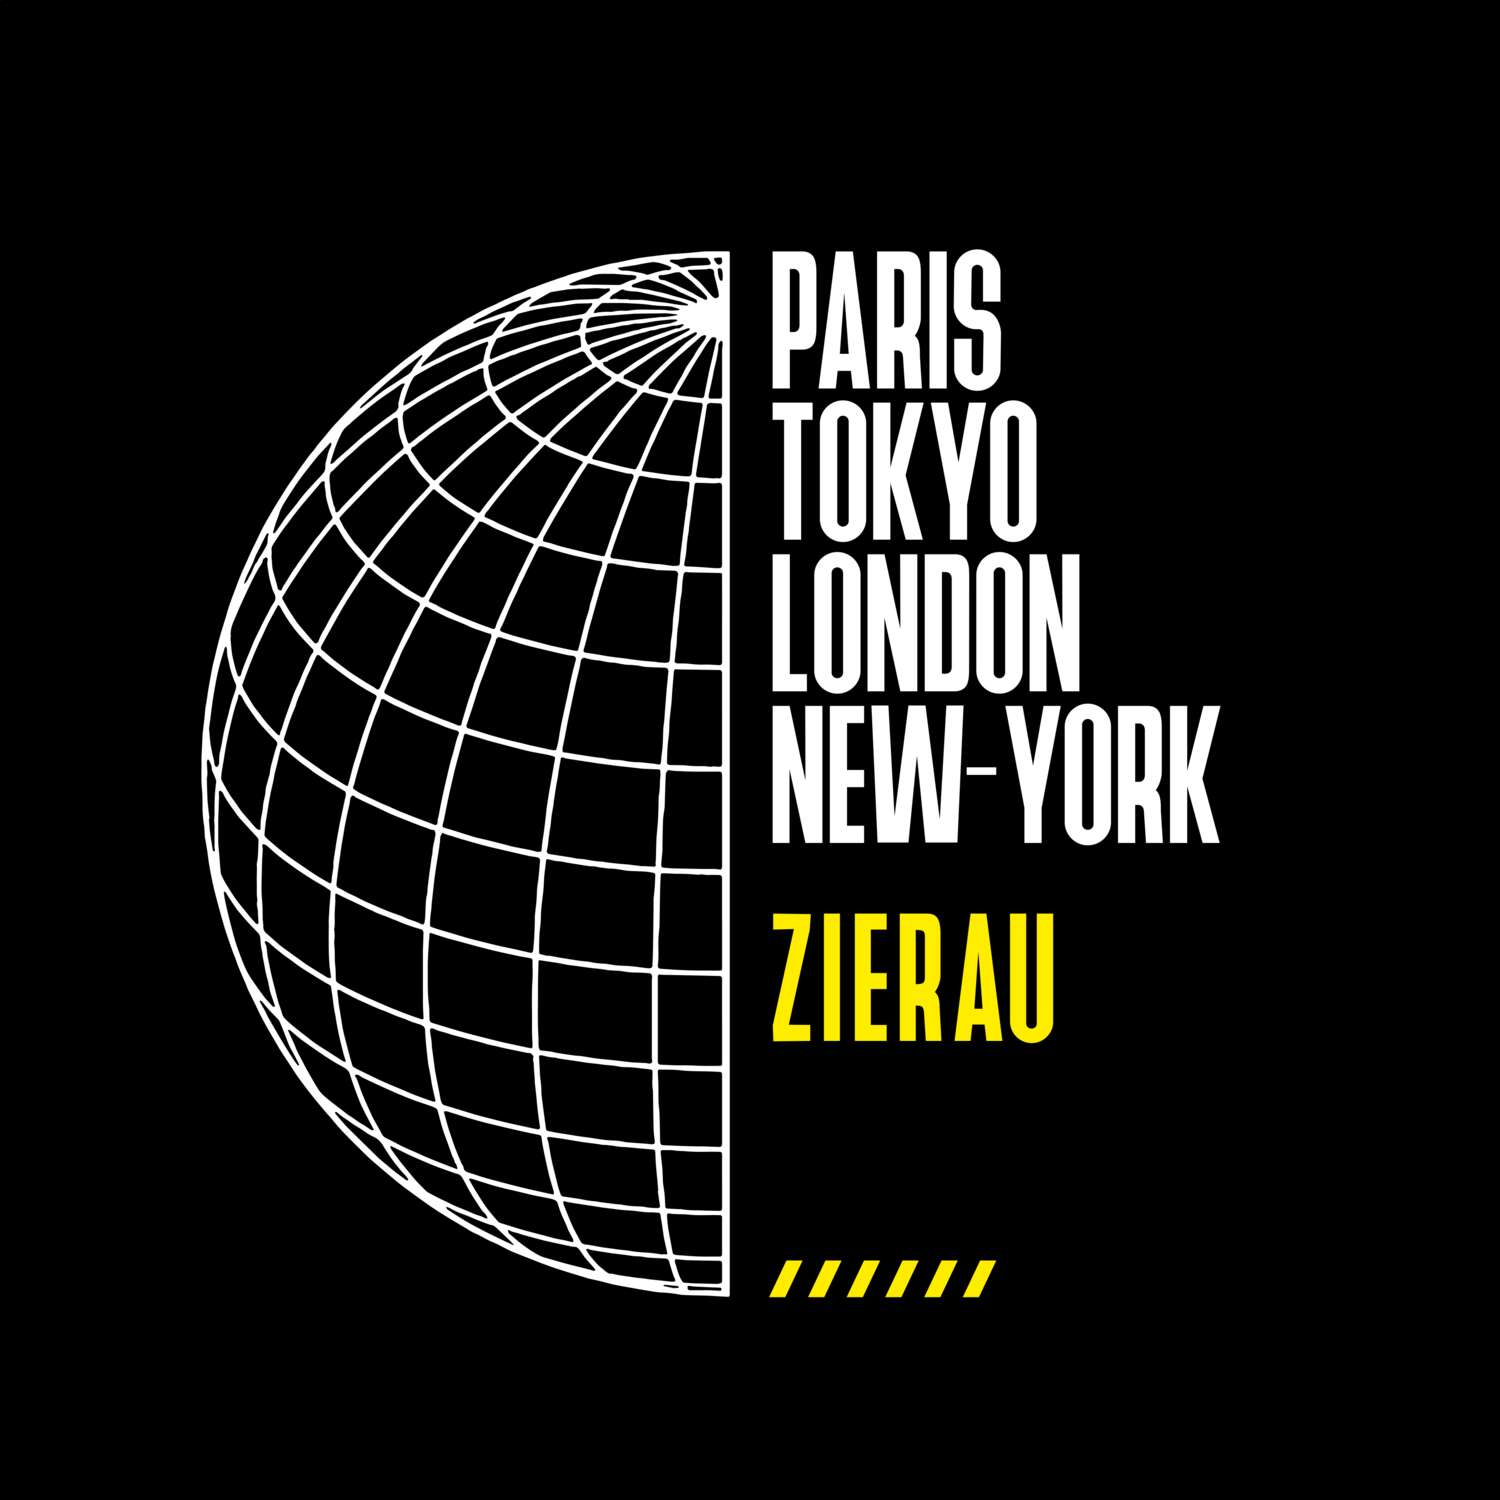 Zierau T-Shirt »Paris Tokyo London«